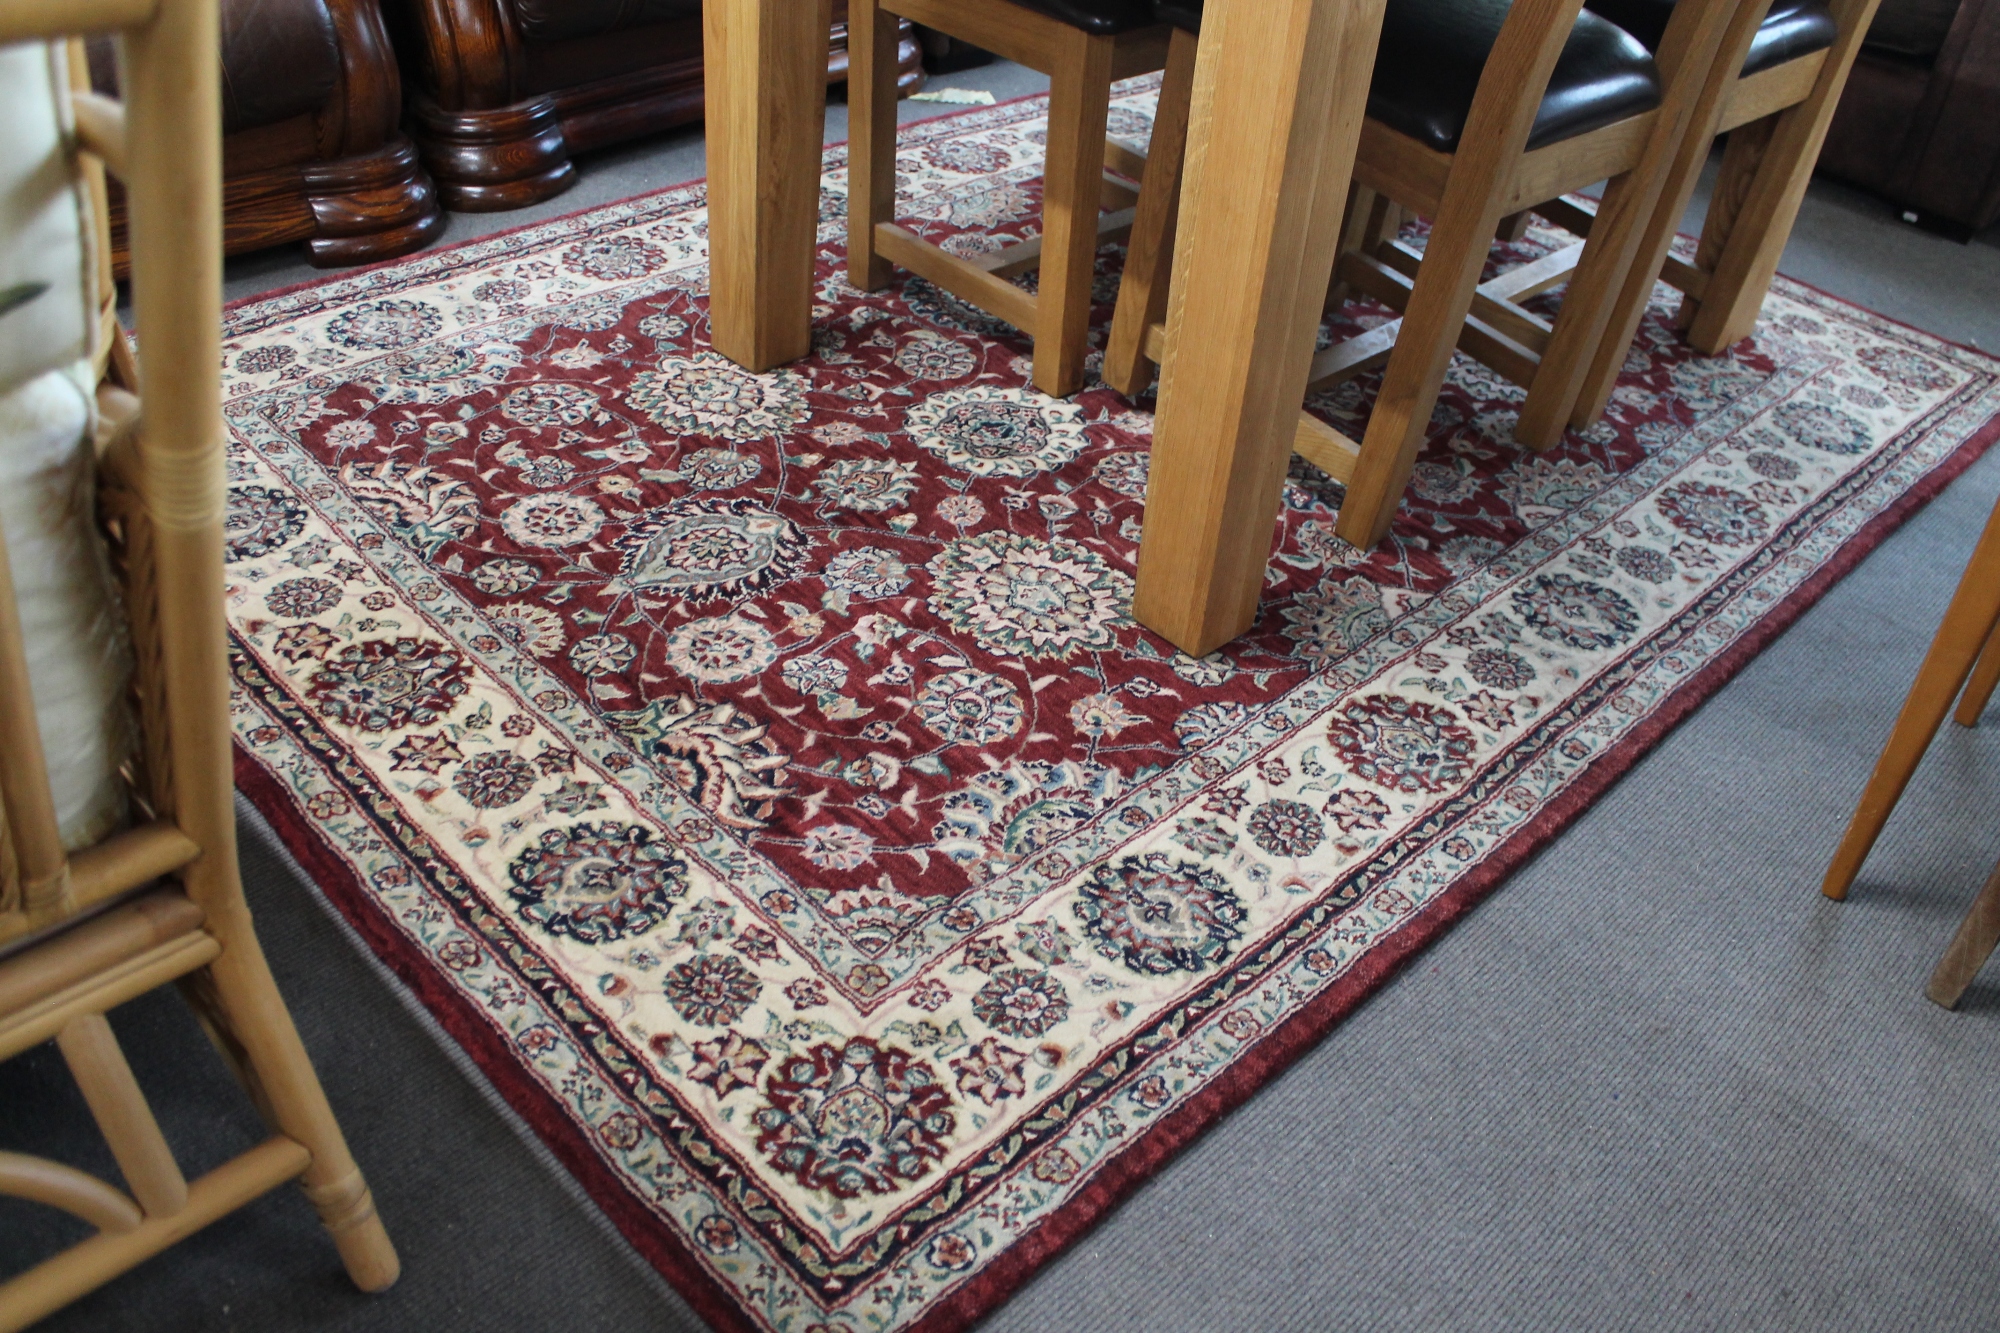 A contemporary Persian style carpet,